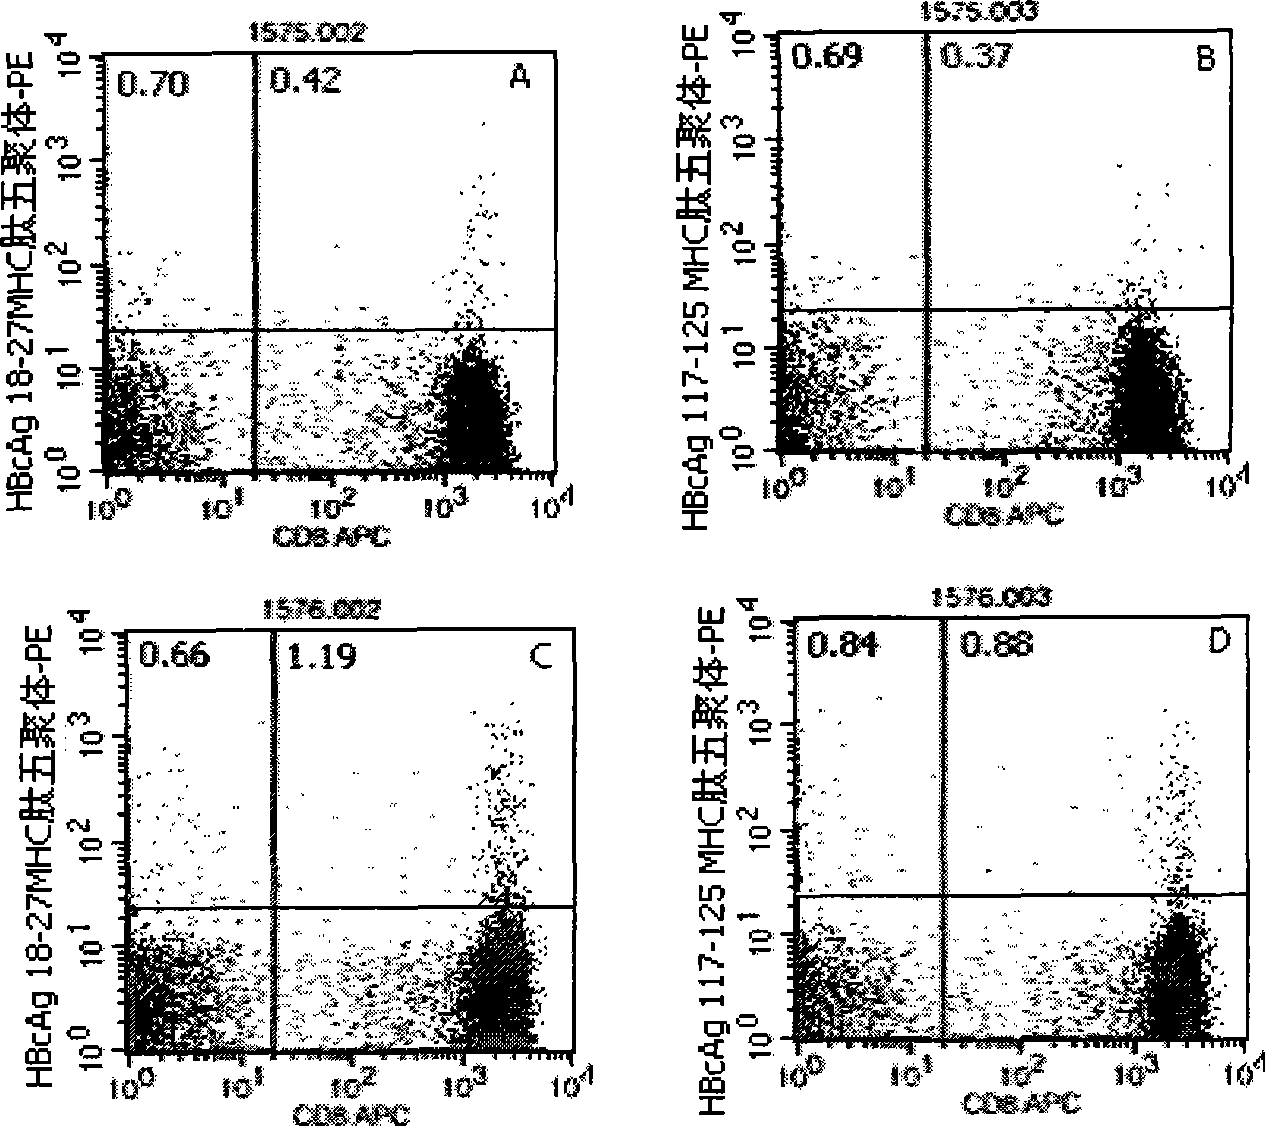 Quantitative determination method for hepatitis b virus specificity cell toxicity T lymphocyte